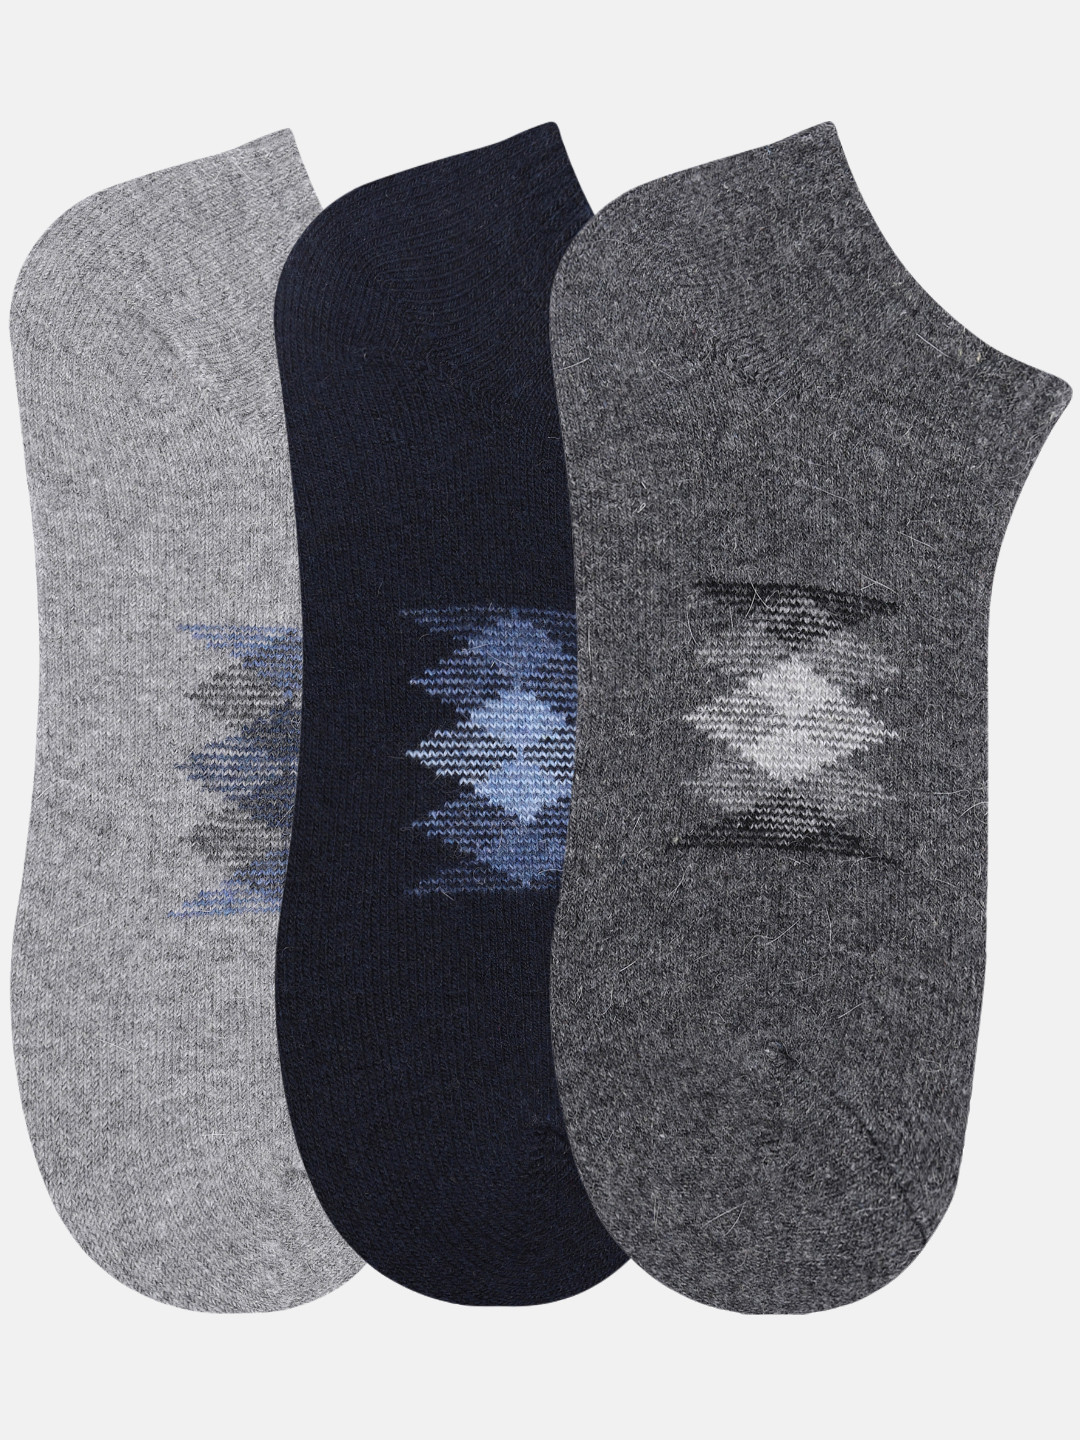 NEXT2SKIN Men Woolen Loafer Socks (Pack of 3) (Light Grey,Navy Blue,Dark Grey) 5929-LGNDG